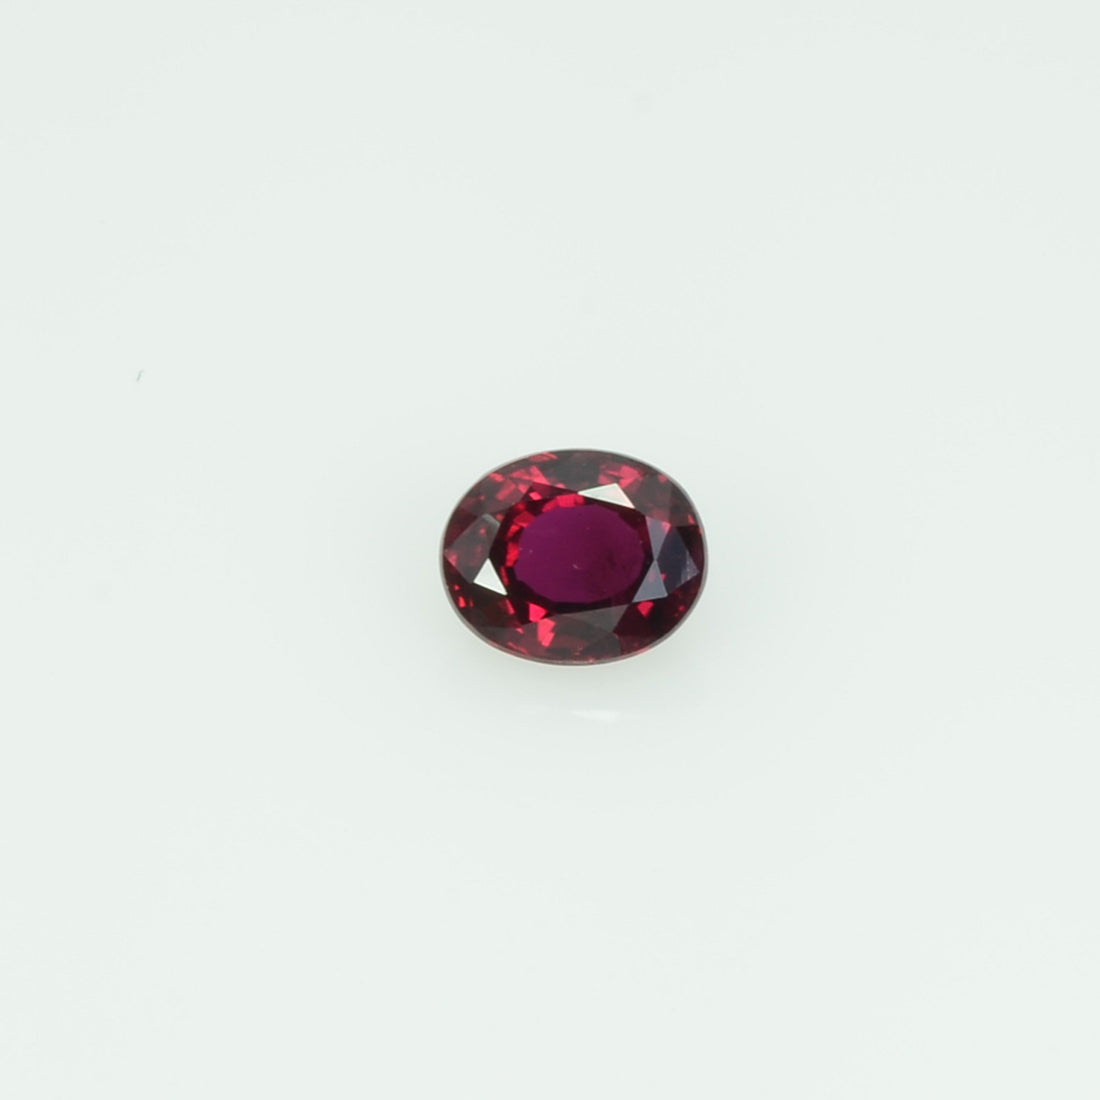 4.5x3.5 Natural Thai Ruby Loose Gemstone Oval Cut - Thai Gems Export Ltd.